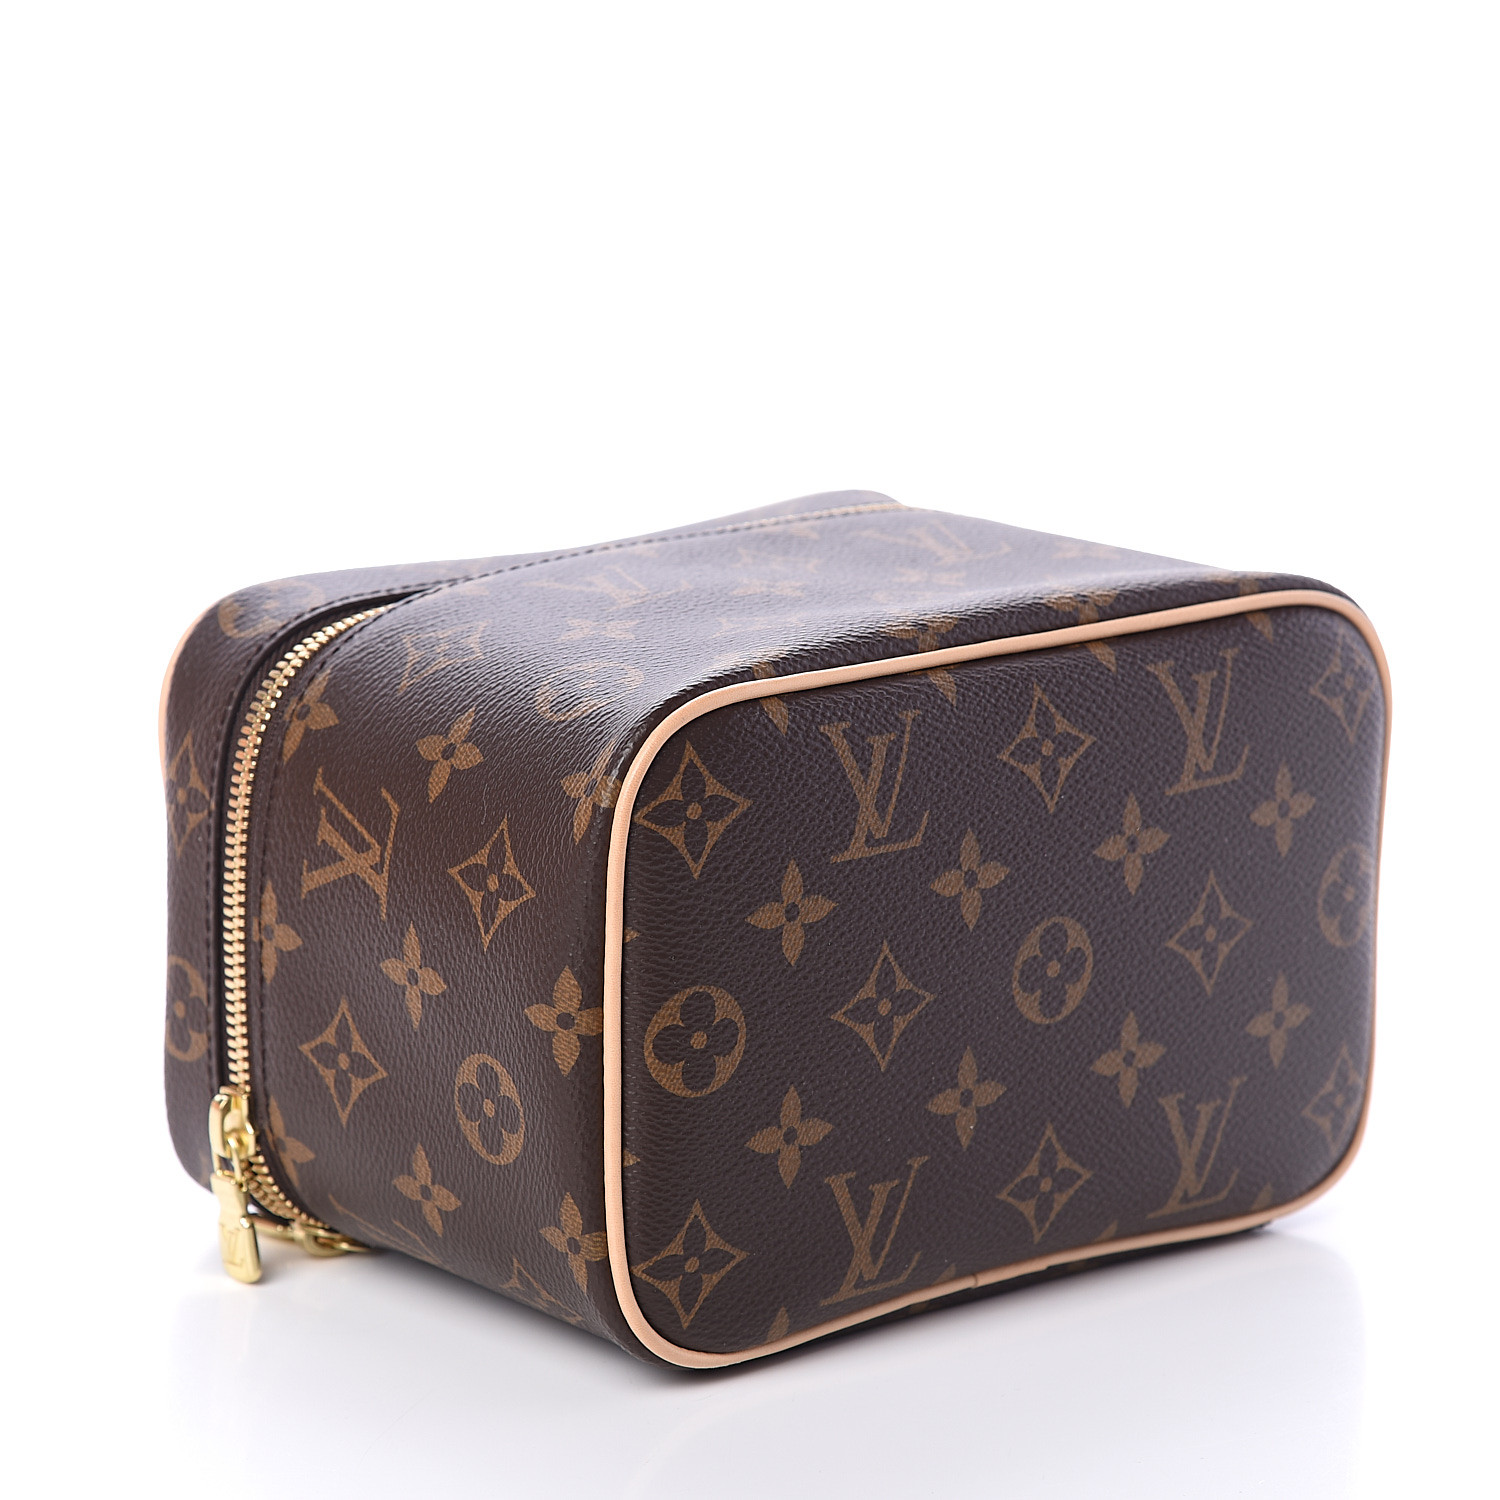 Shop Louis Vuitton Nice mini toiletry pouch (M44495) by